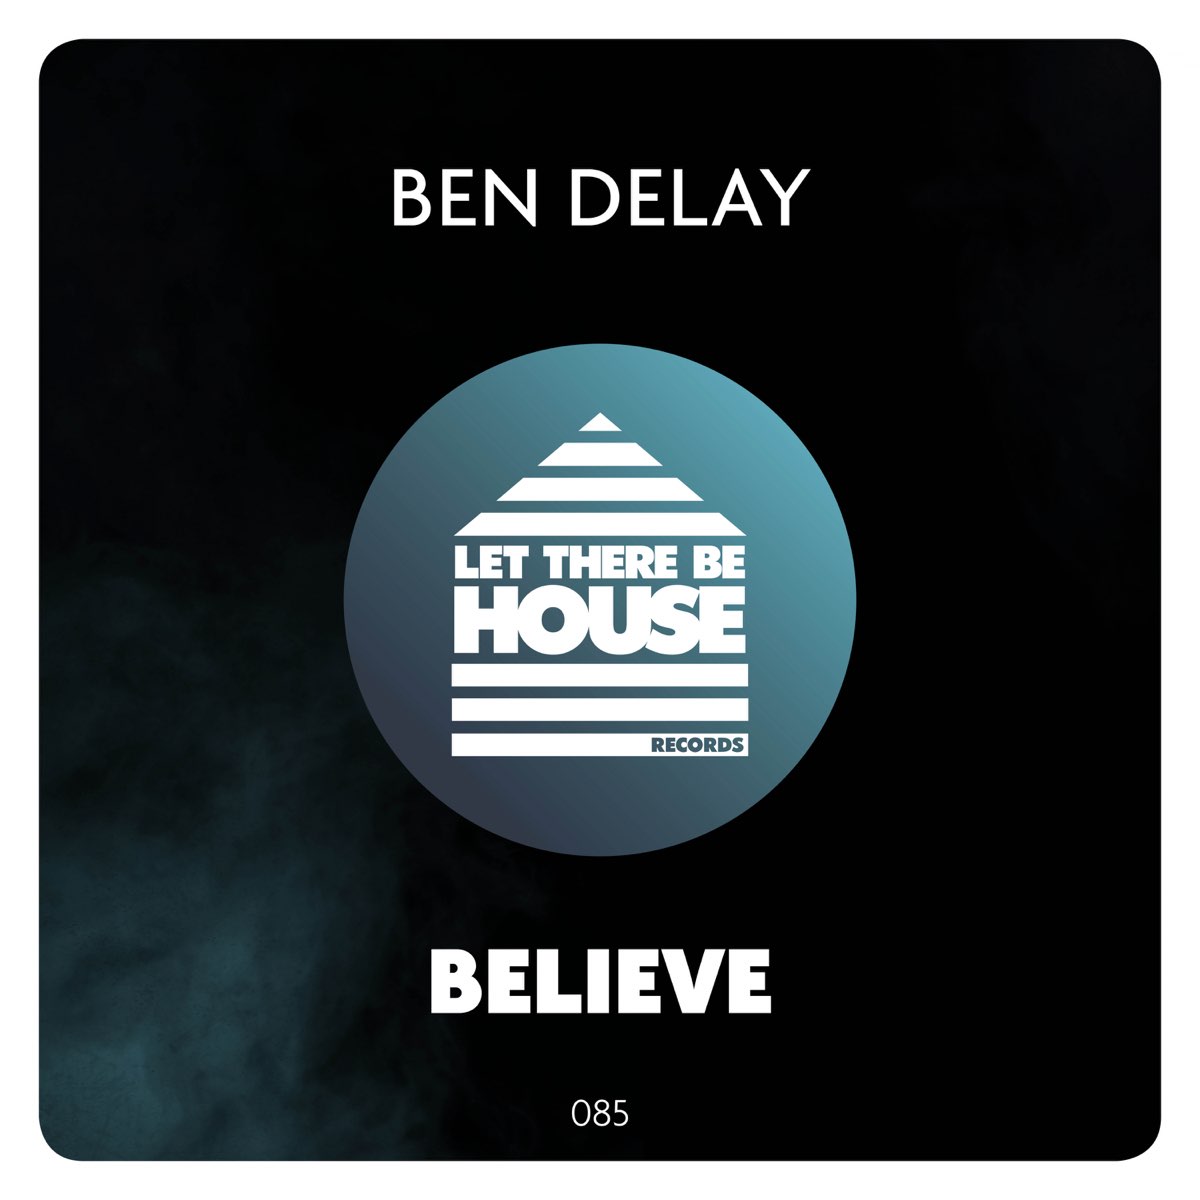 Ben delay feat. "Ben delay" && ( исполнитель | группа | музыка | Music | Band | artist ) && (фото | photo). Believe песня. Ben delay i never felt so right Radio Mix. Ben delay i never felt so right.